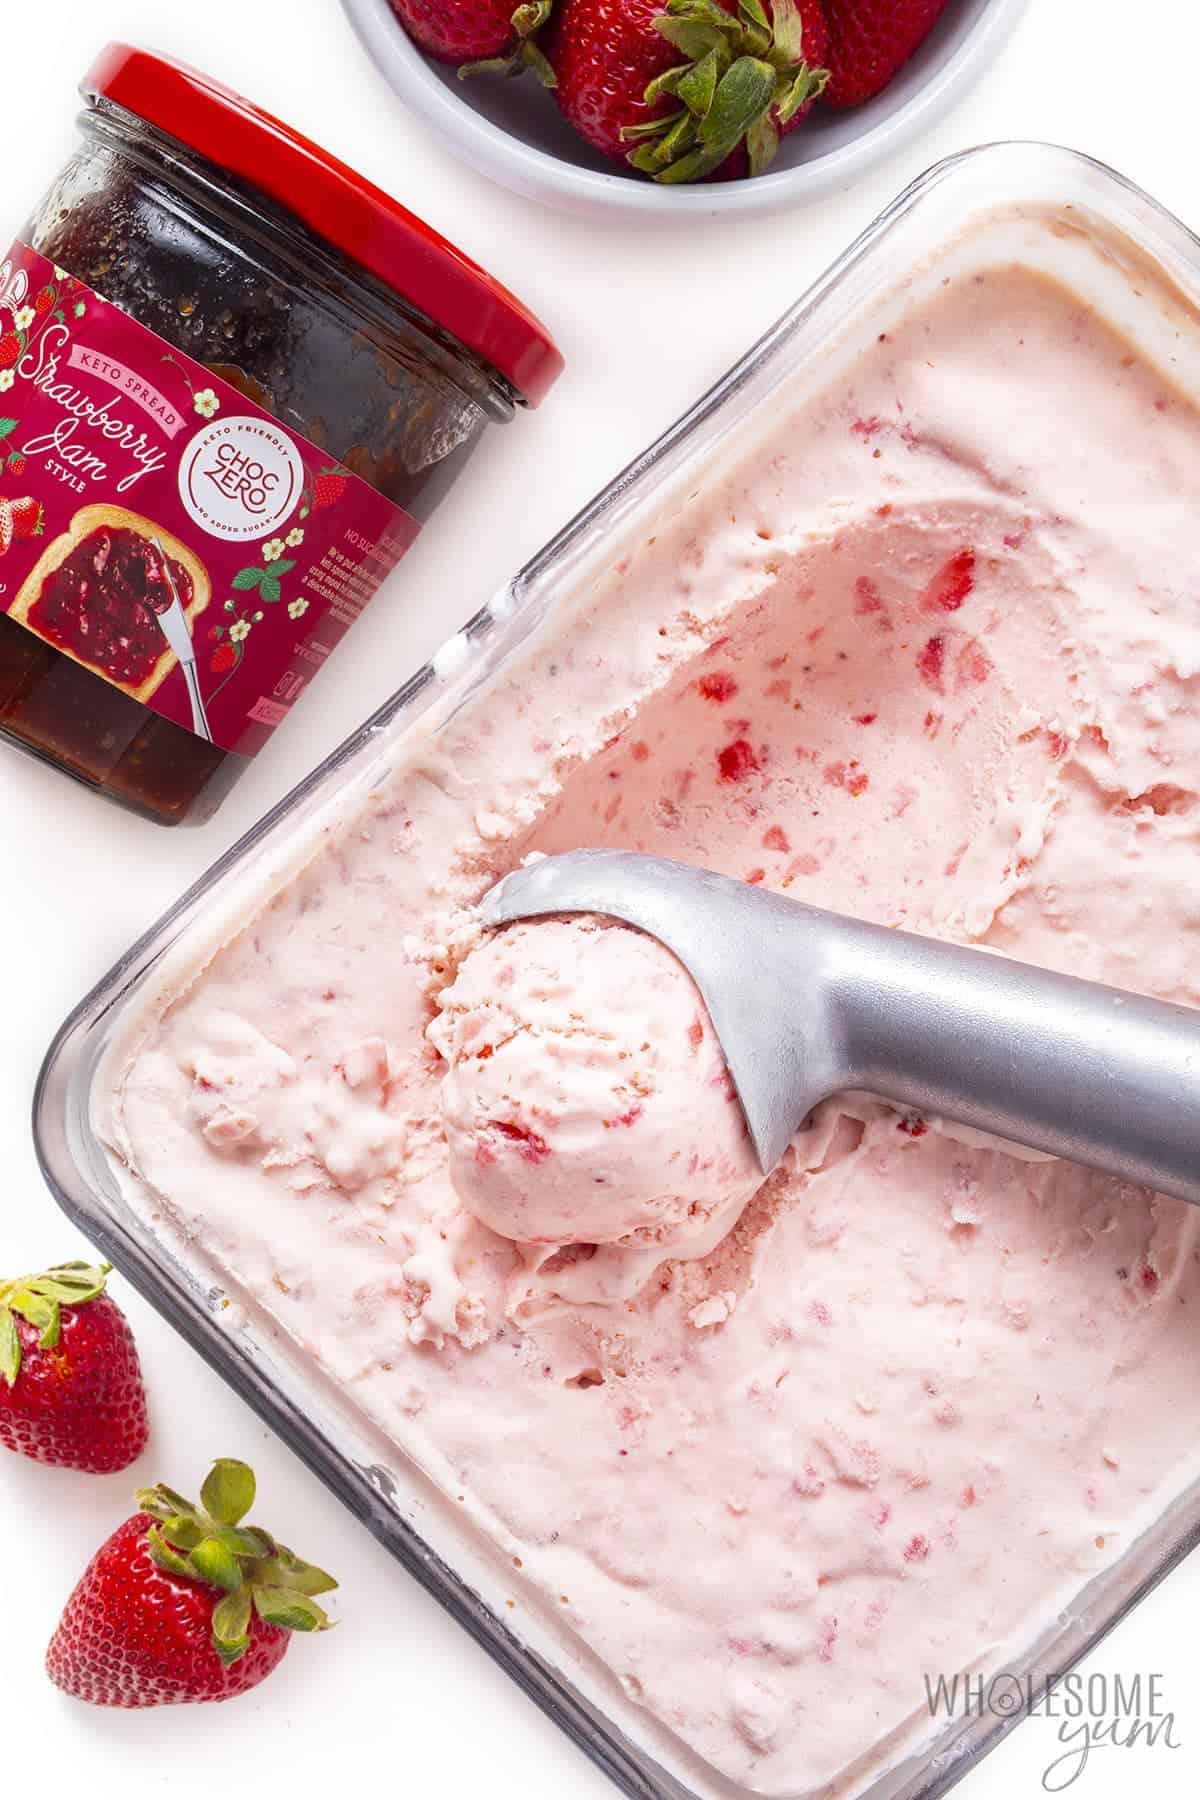 Keto strawberry ice cream next to jar of ChocZero strawberry jam.